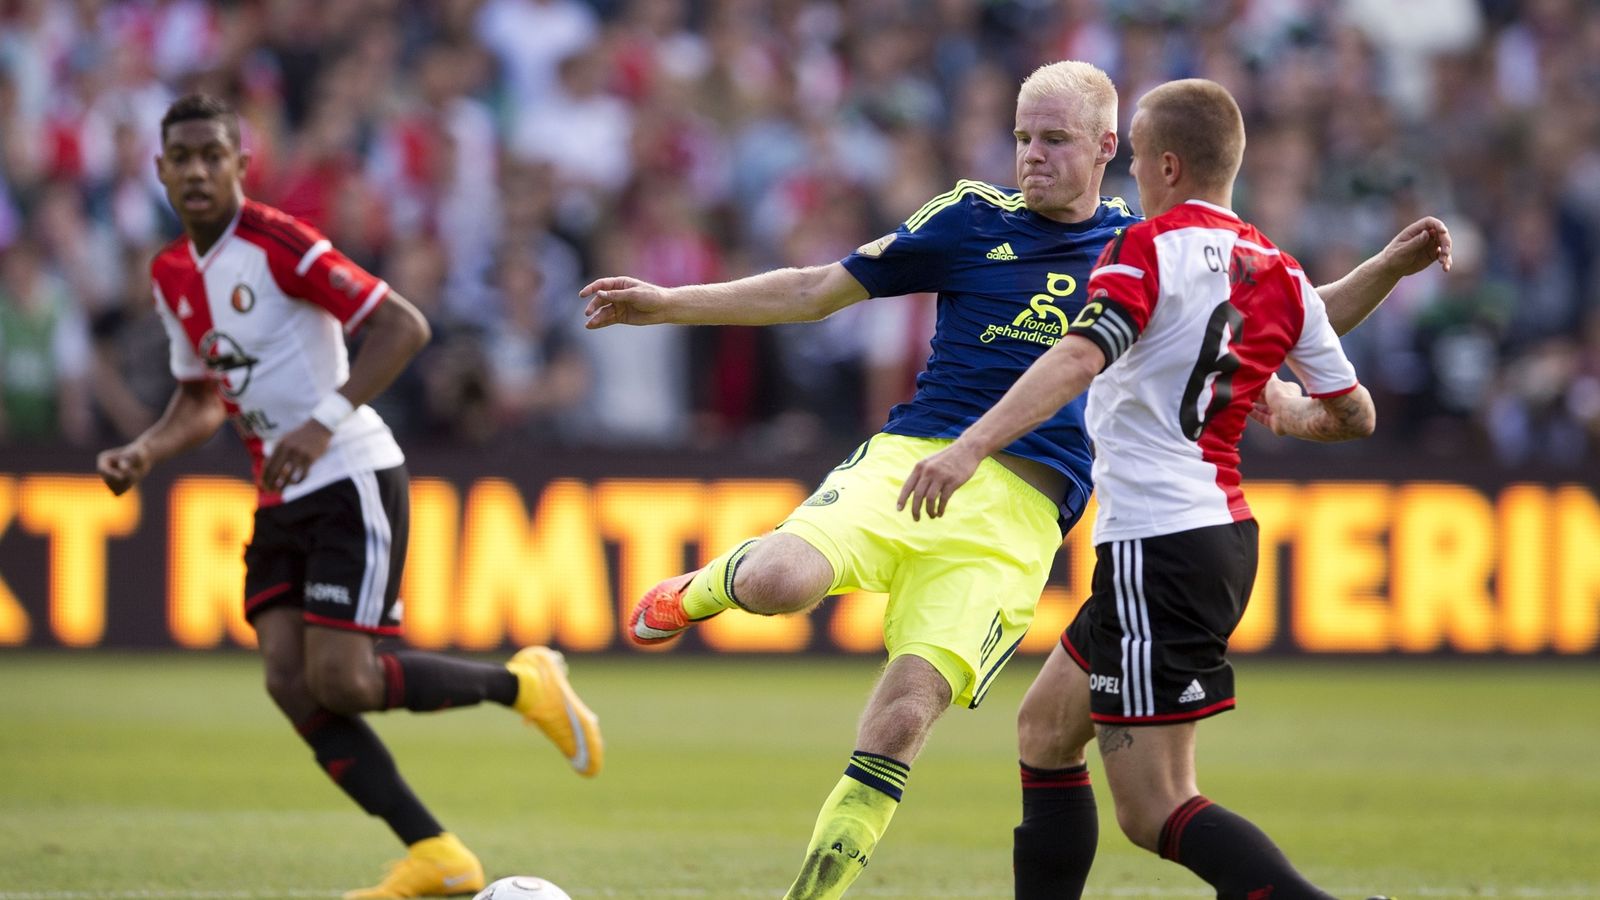 Feyenoord vs Ajax – Semi-Final – Preview & Prediction